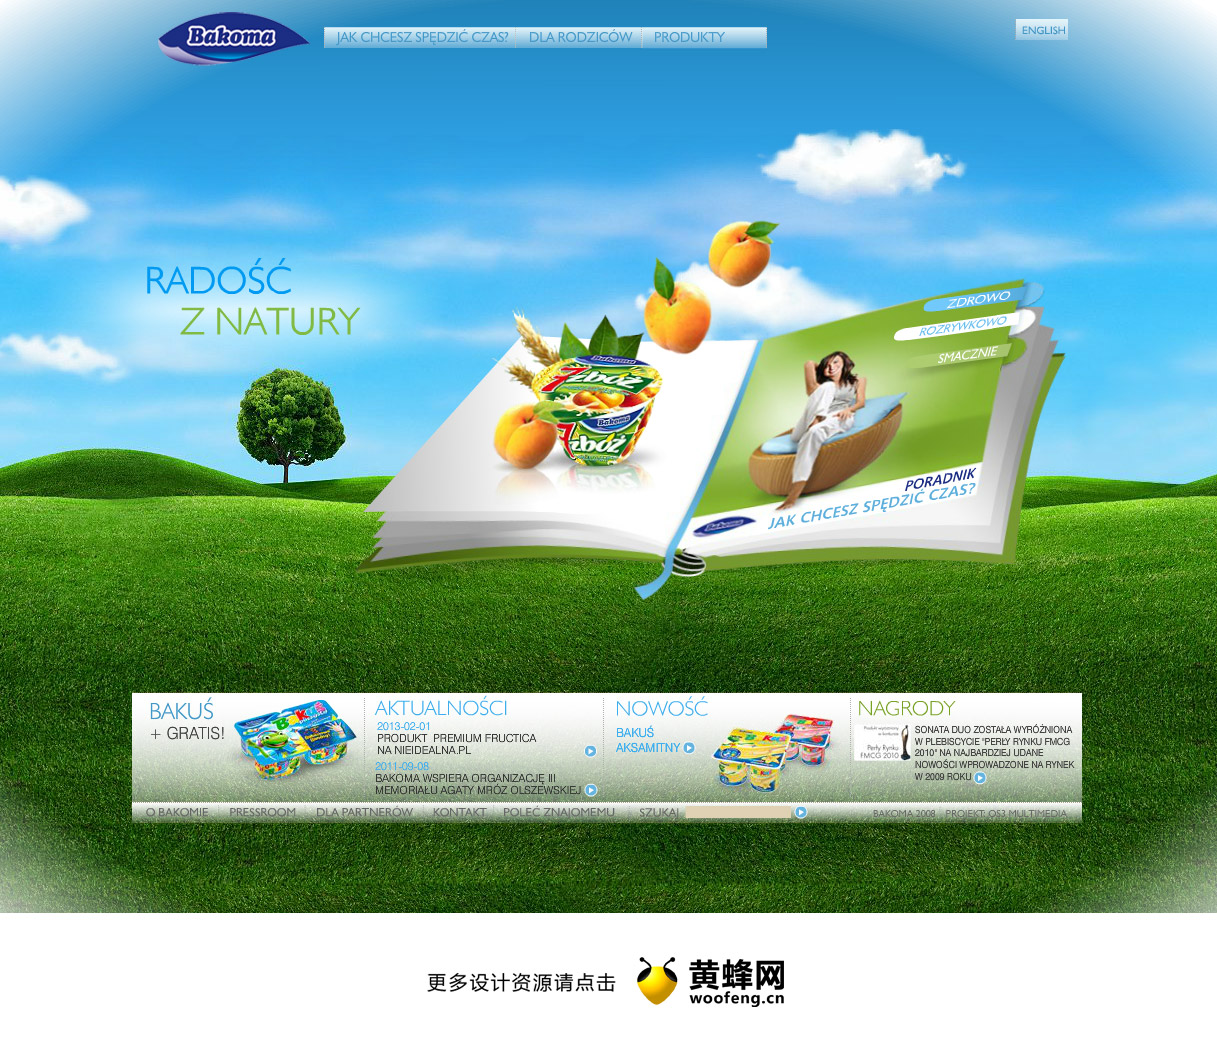 Bakoma酸奶品牌网站，来源自黄蜂网https://woofeng.cn/web/